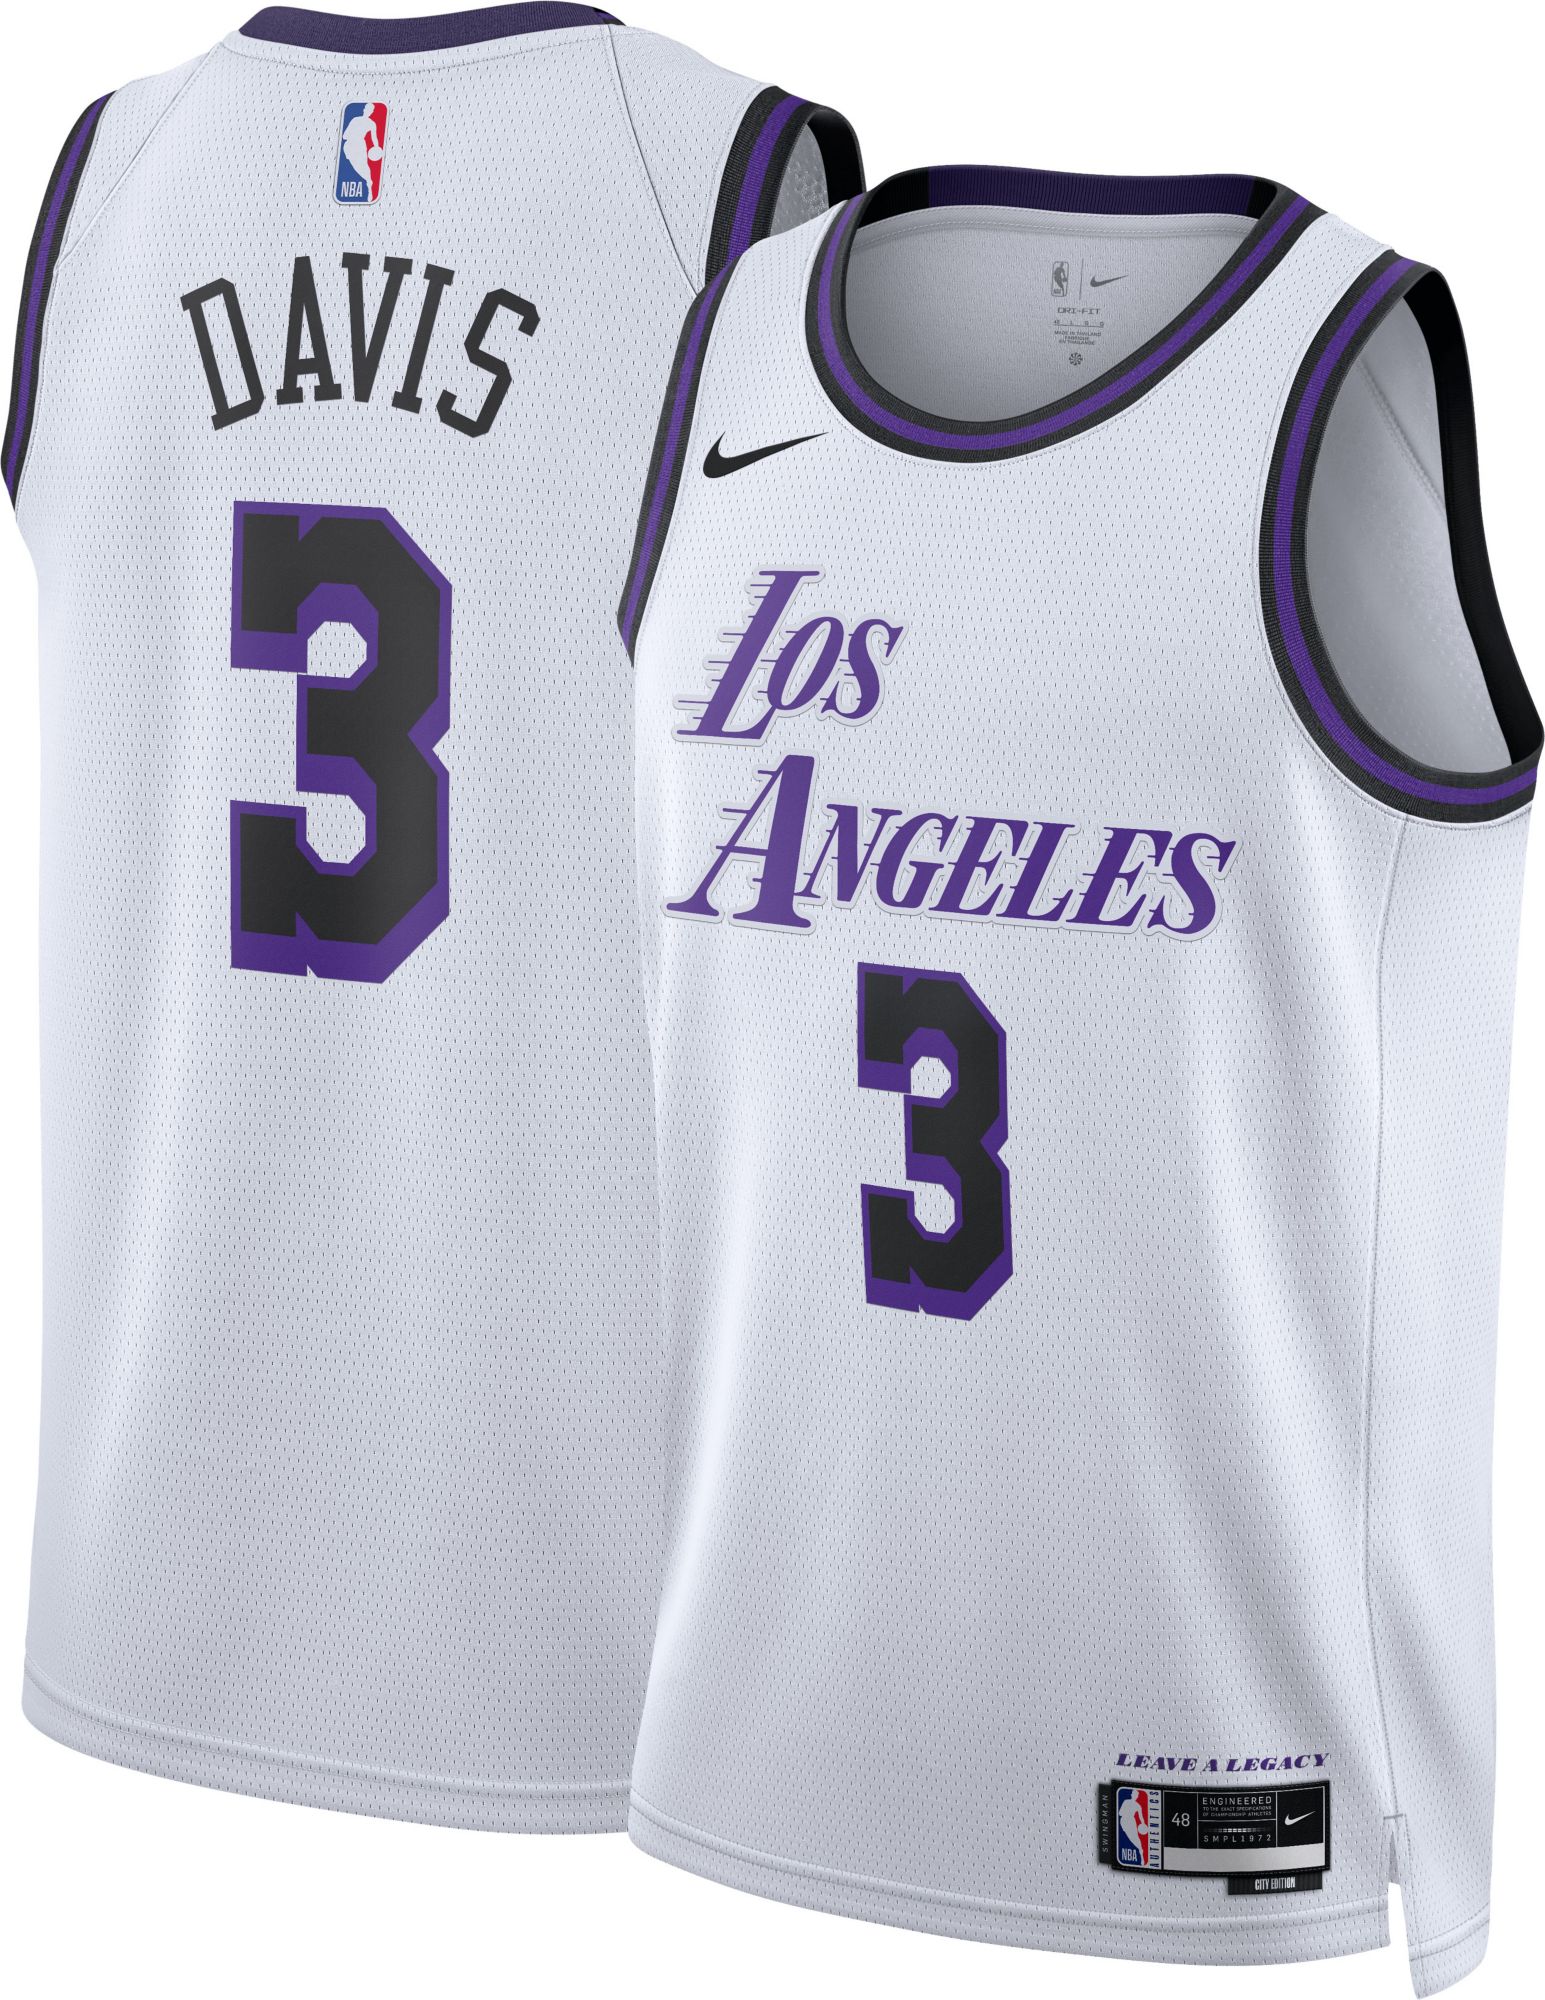 Nike Mens LeBron James Select Series Jersey Field Purple S